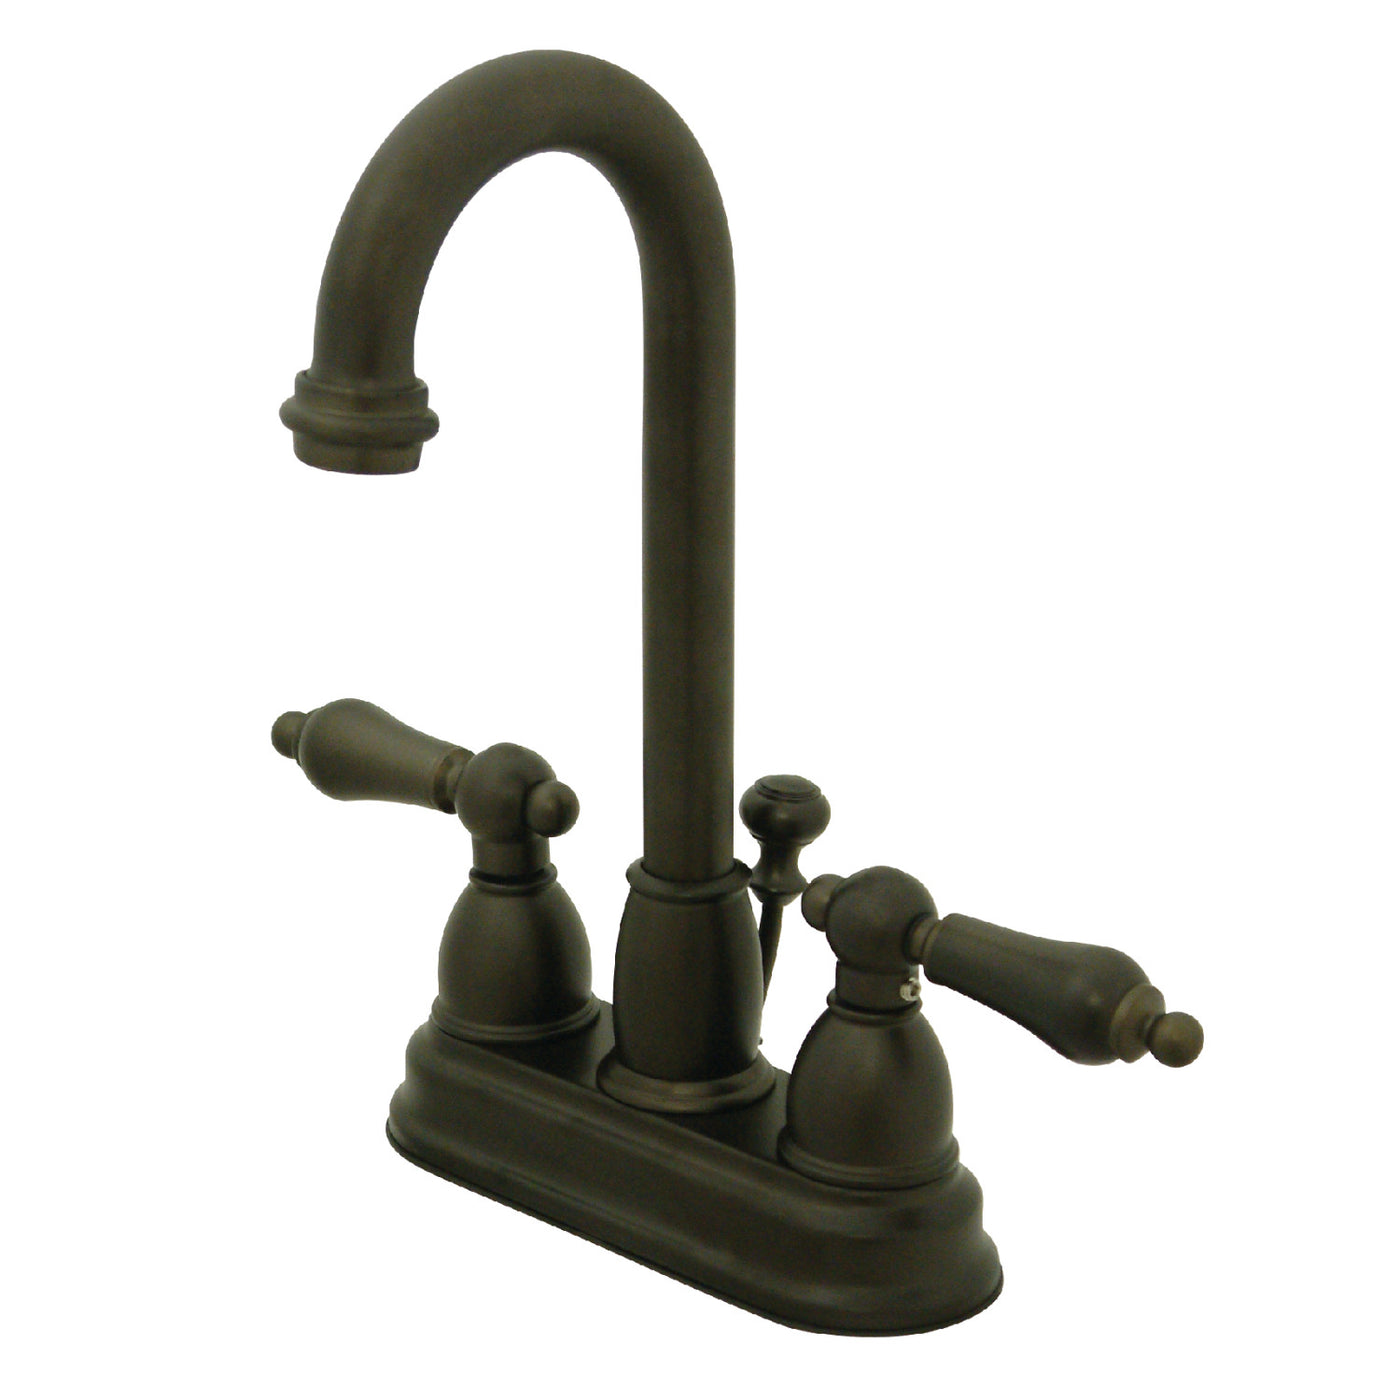 Elements of Design EB3615AL 4-Inch Centerset Bathroom Faucet, Oil Rubbed Bronze